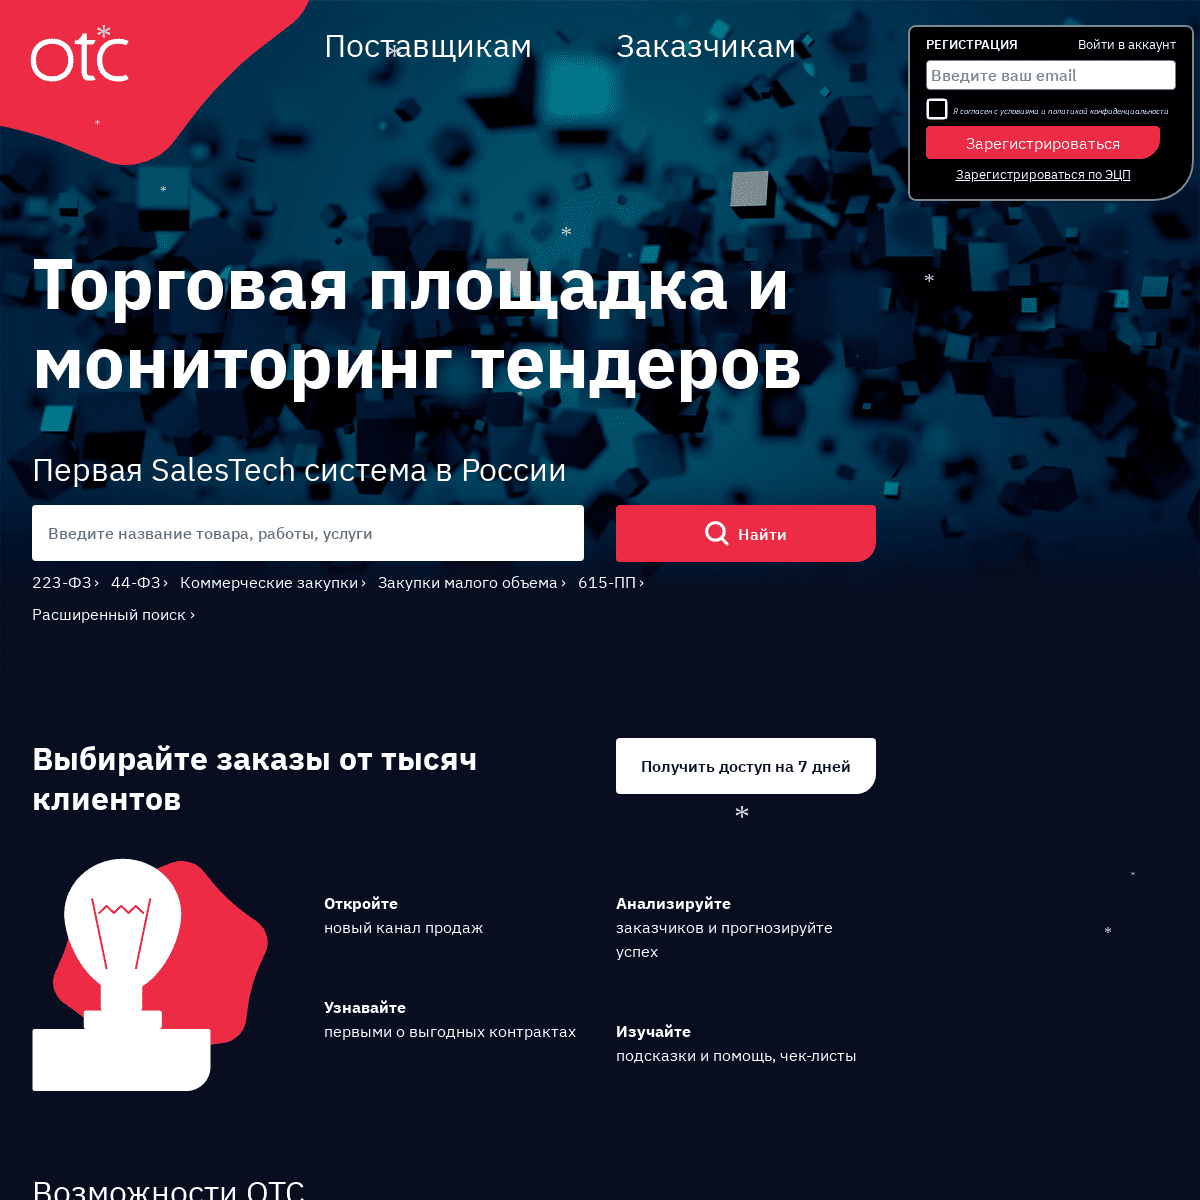 A complete backup of otc.ru